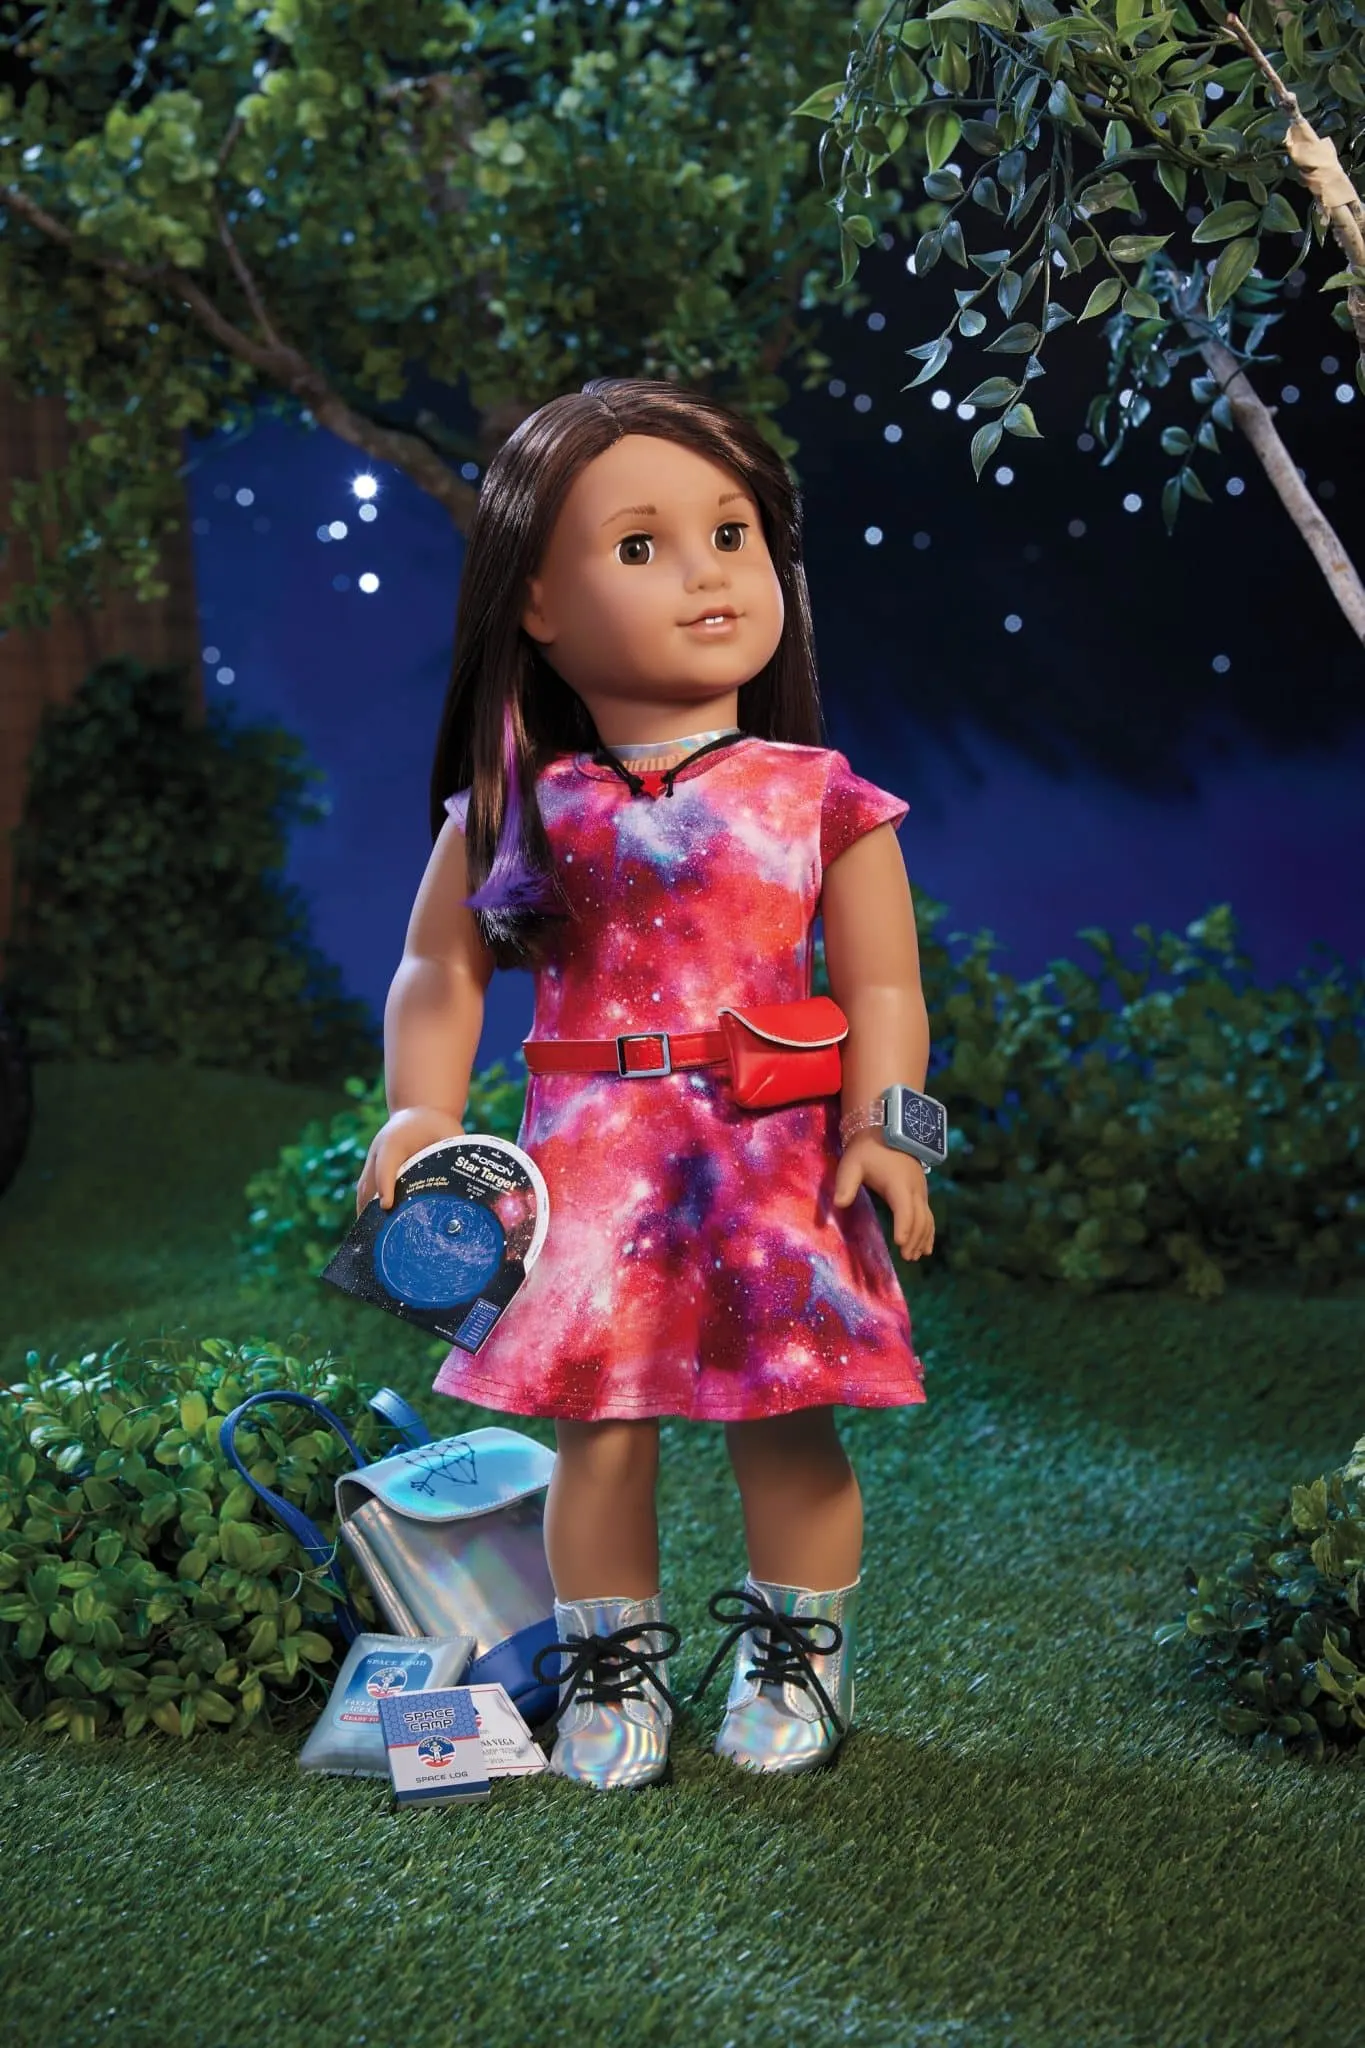 American Girl's Doll of the Year, Luciana Vega!! @American_Girl